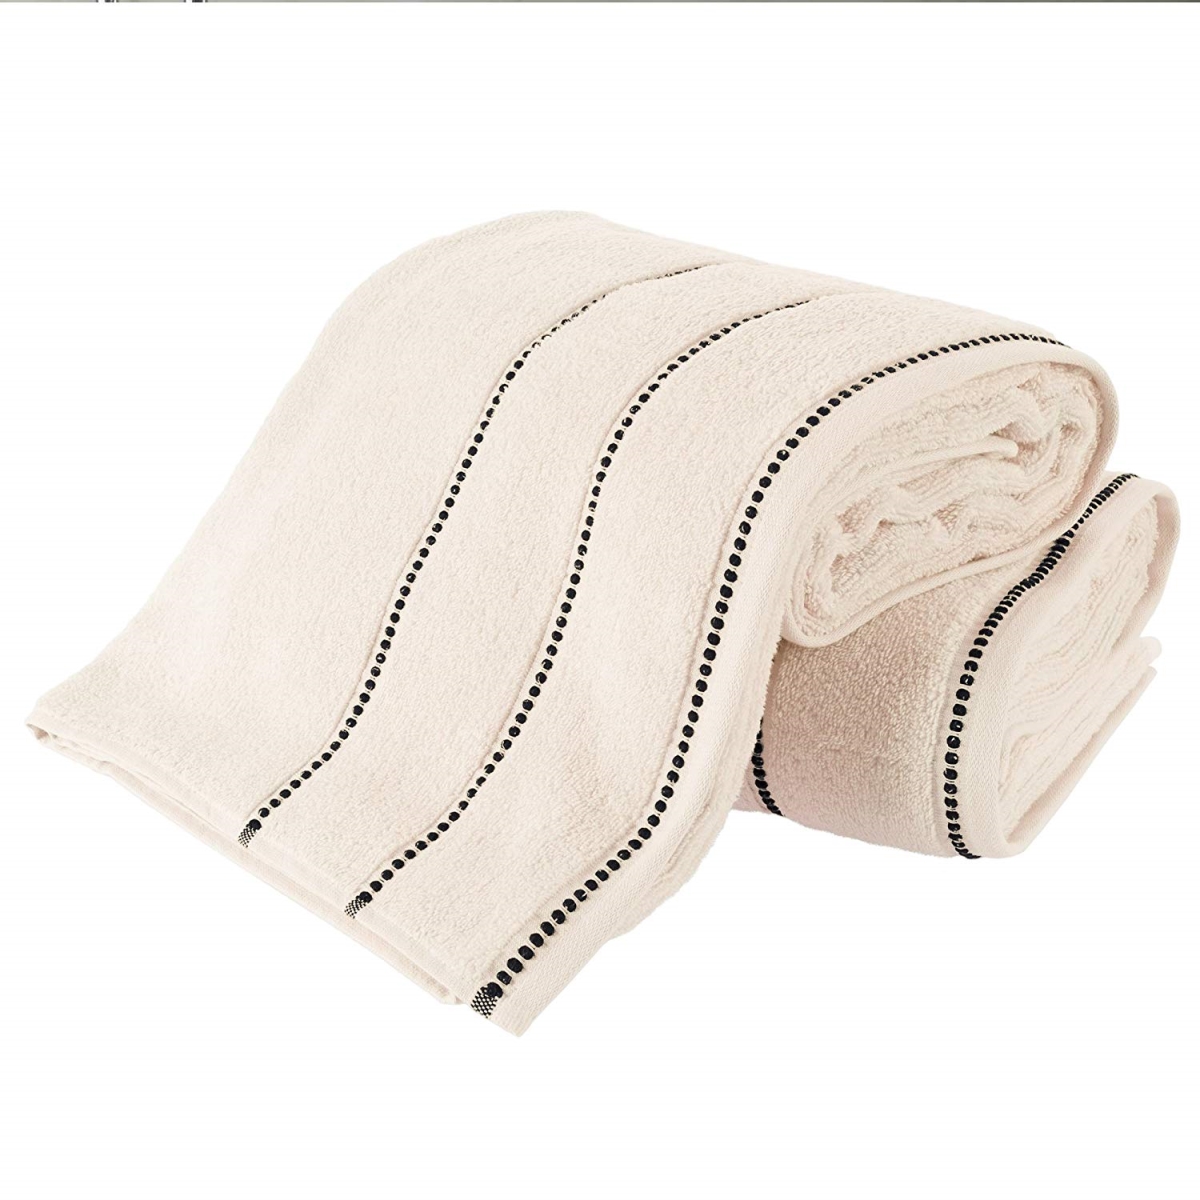 67a-82634 Luxury Cotton Towel Set, Bone & Black - 2 Piece